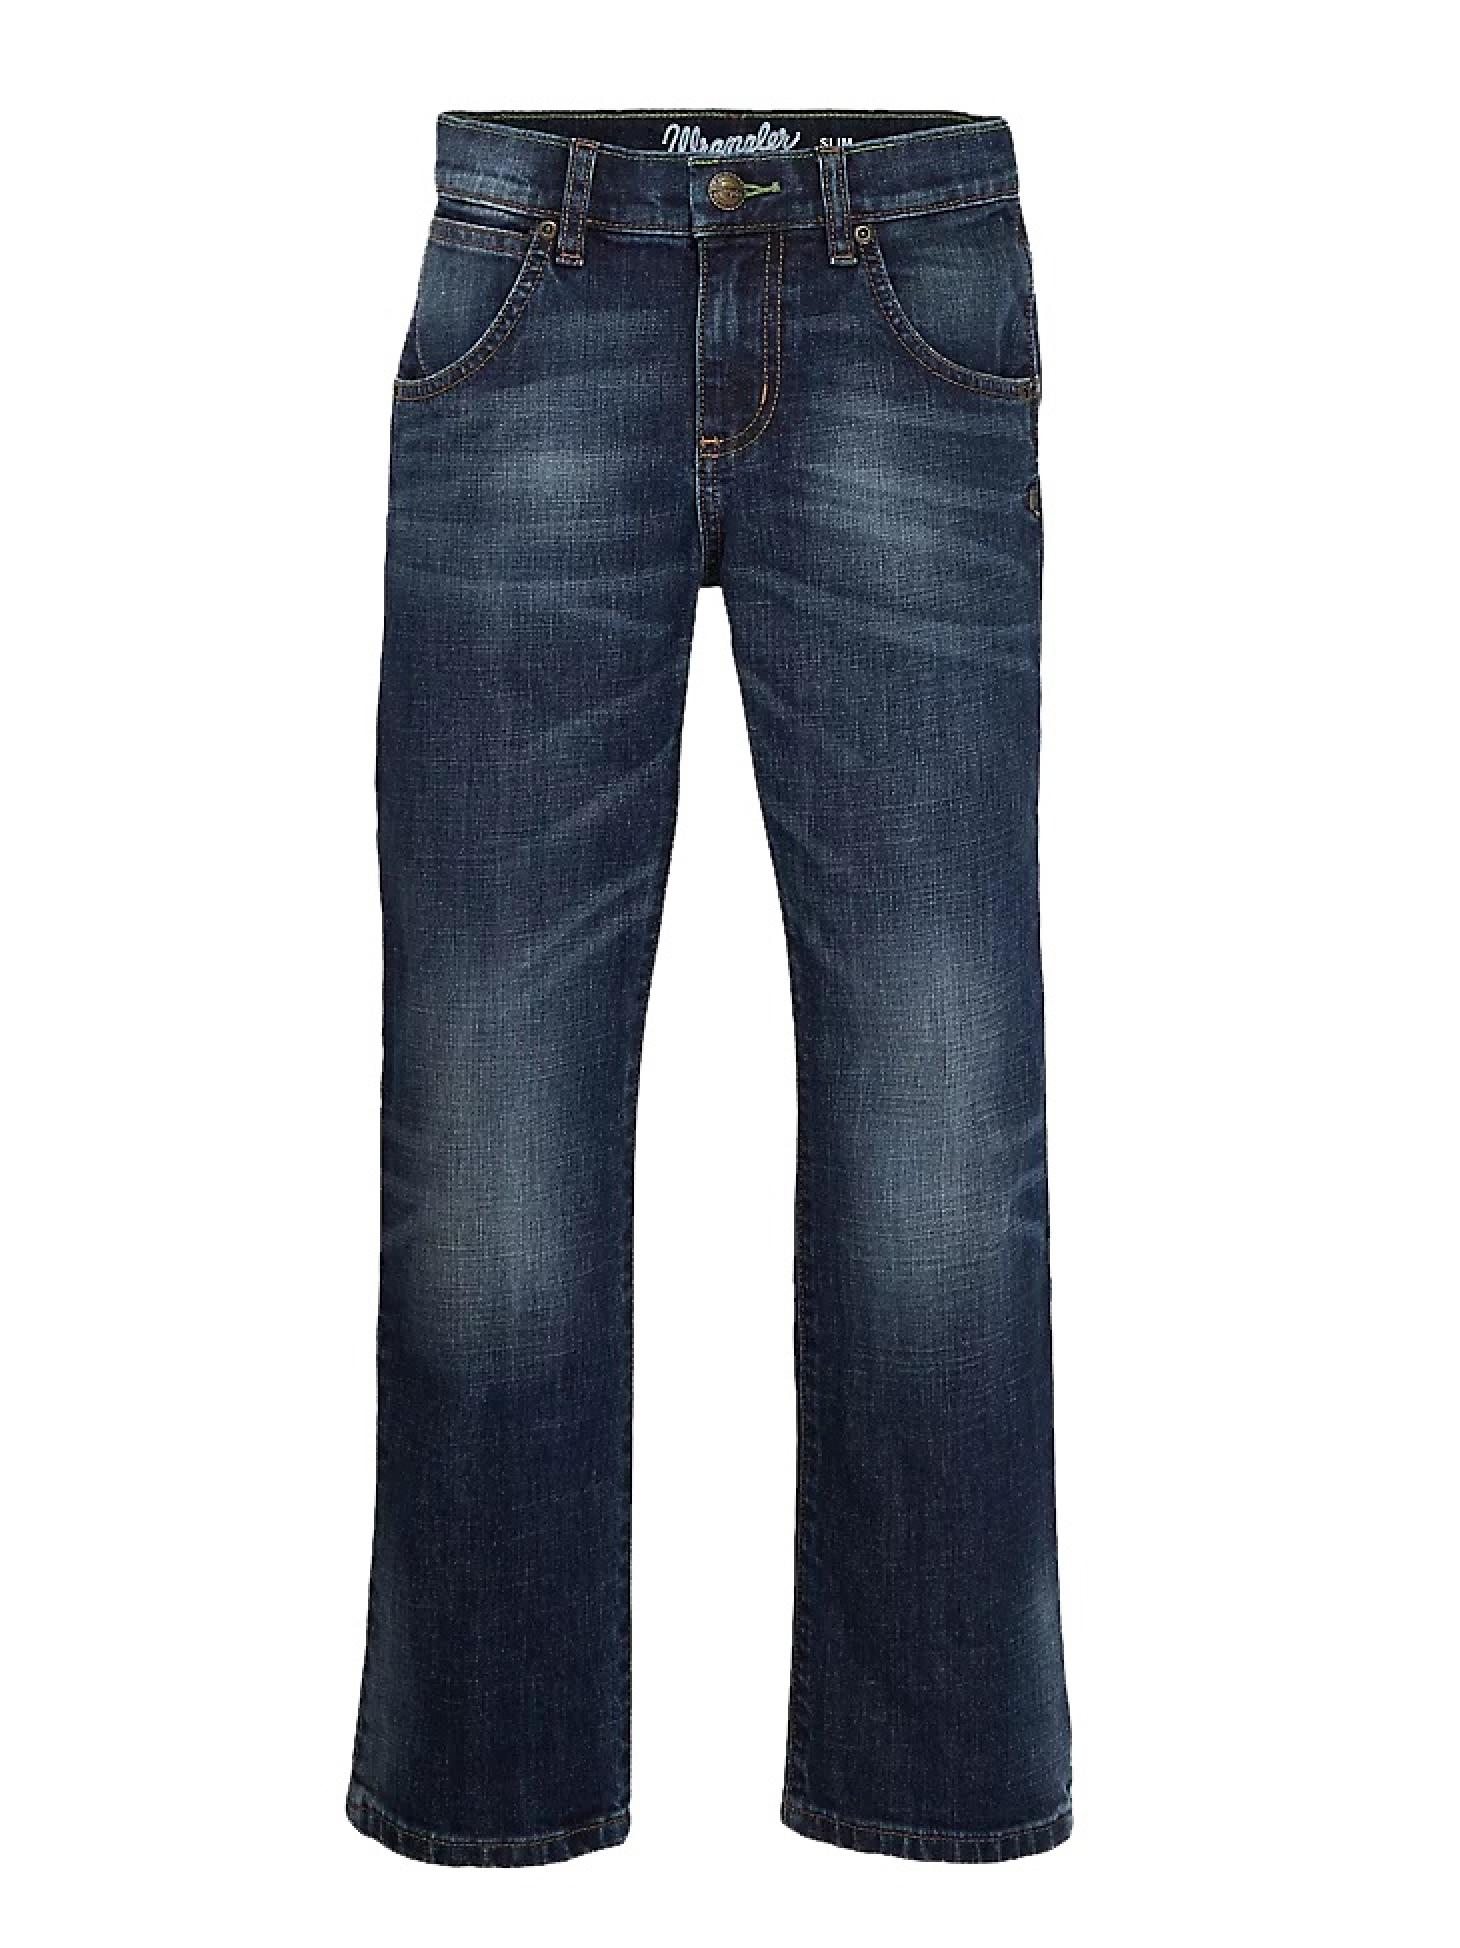 Wrangler Boys Retro Slim Straight Jean